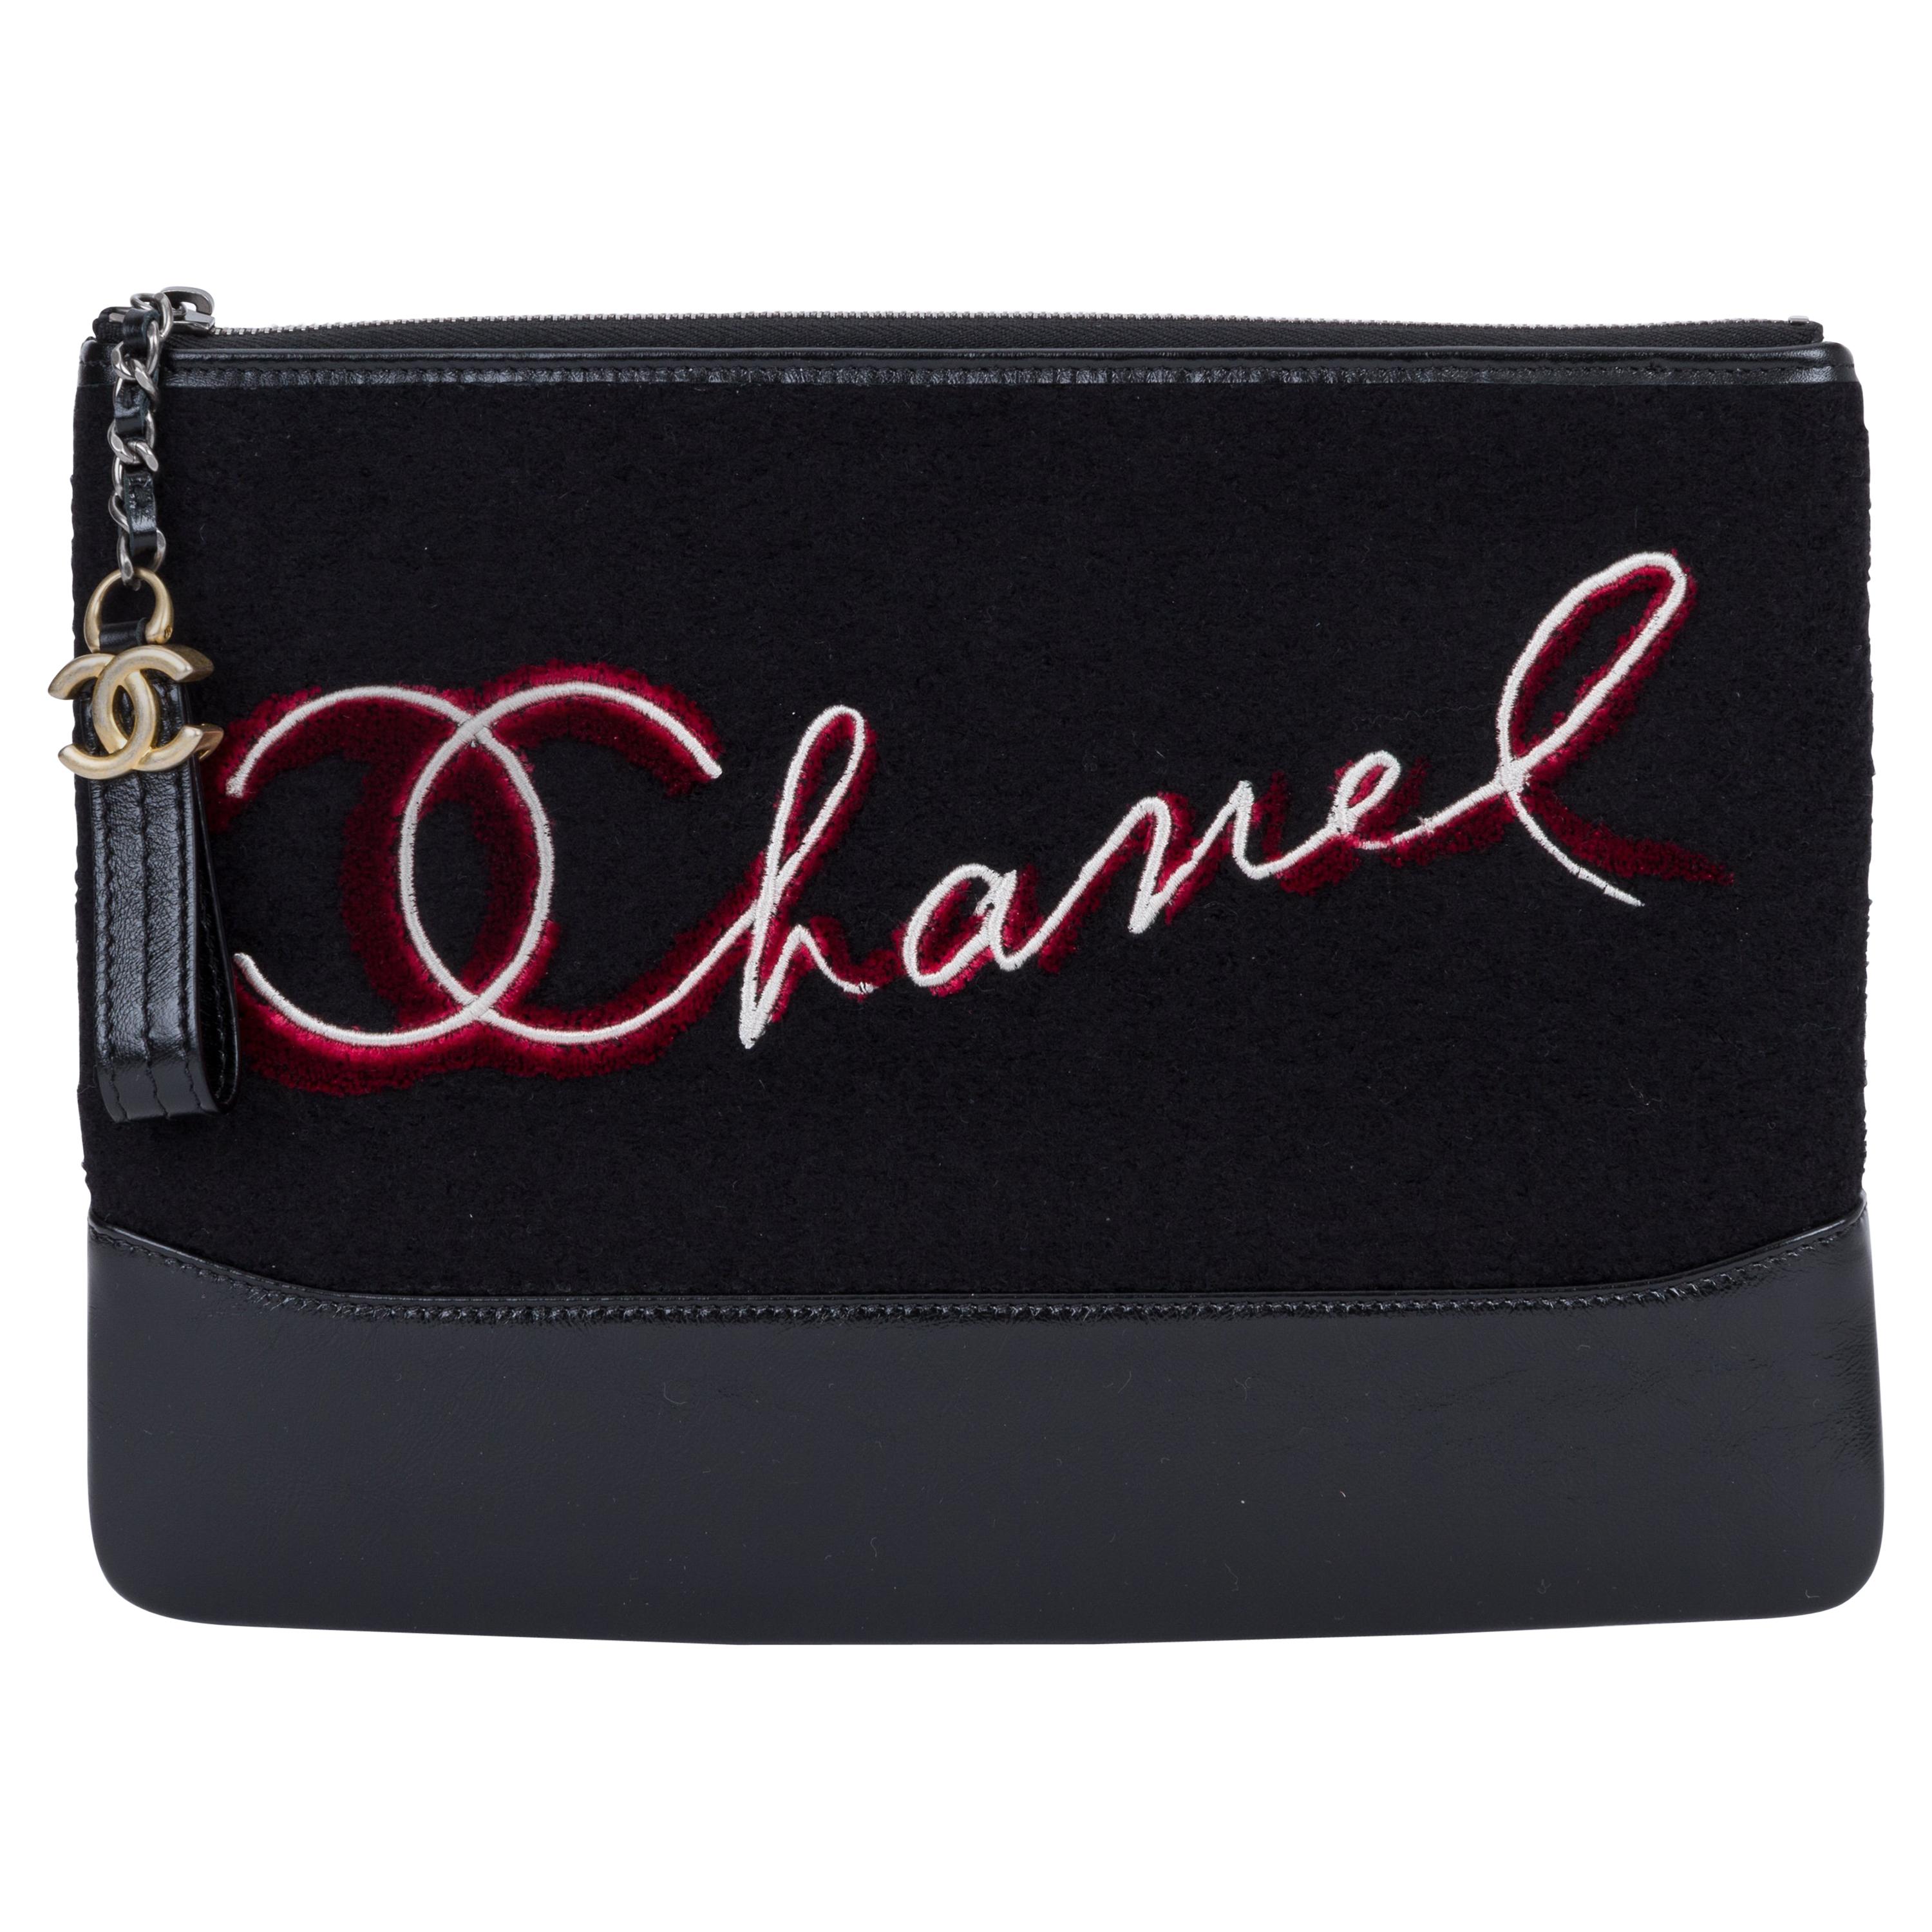 New in Box Chanel Black Paris Salzburg Clutch Bag